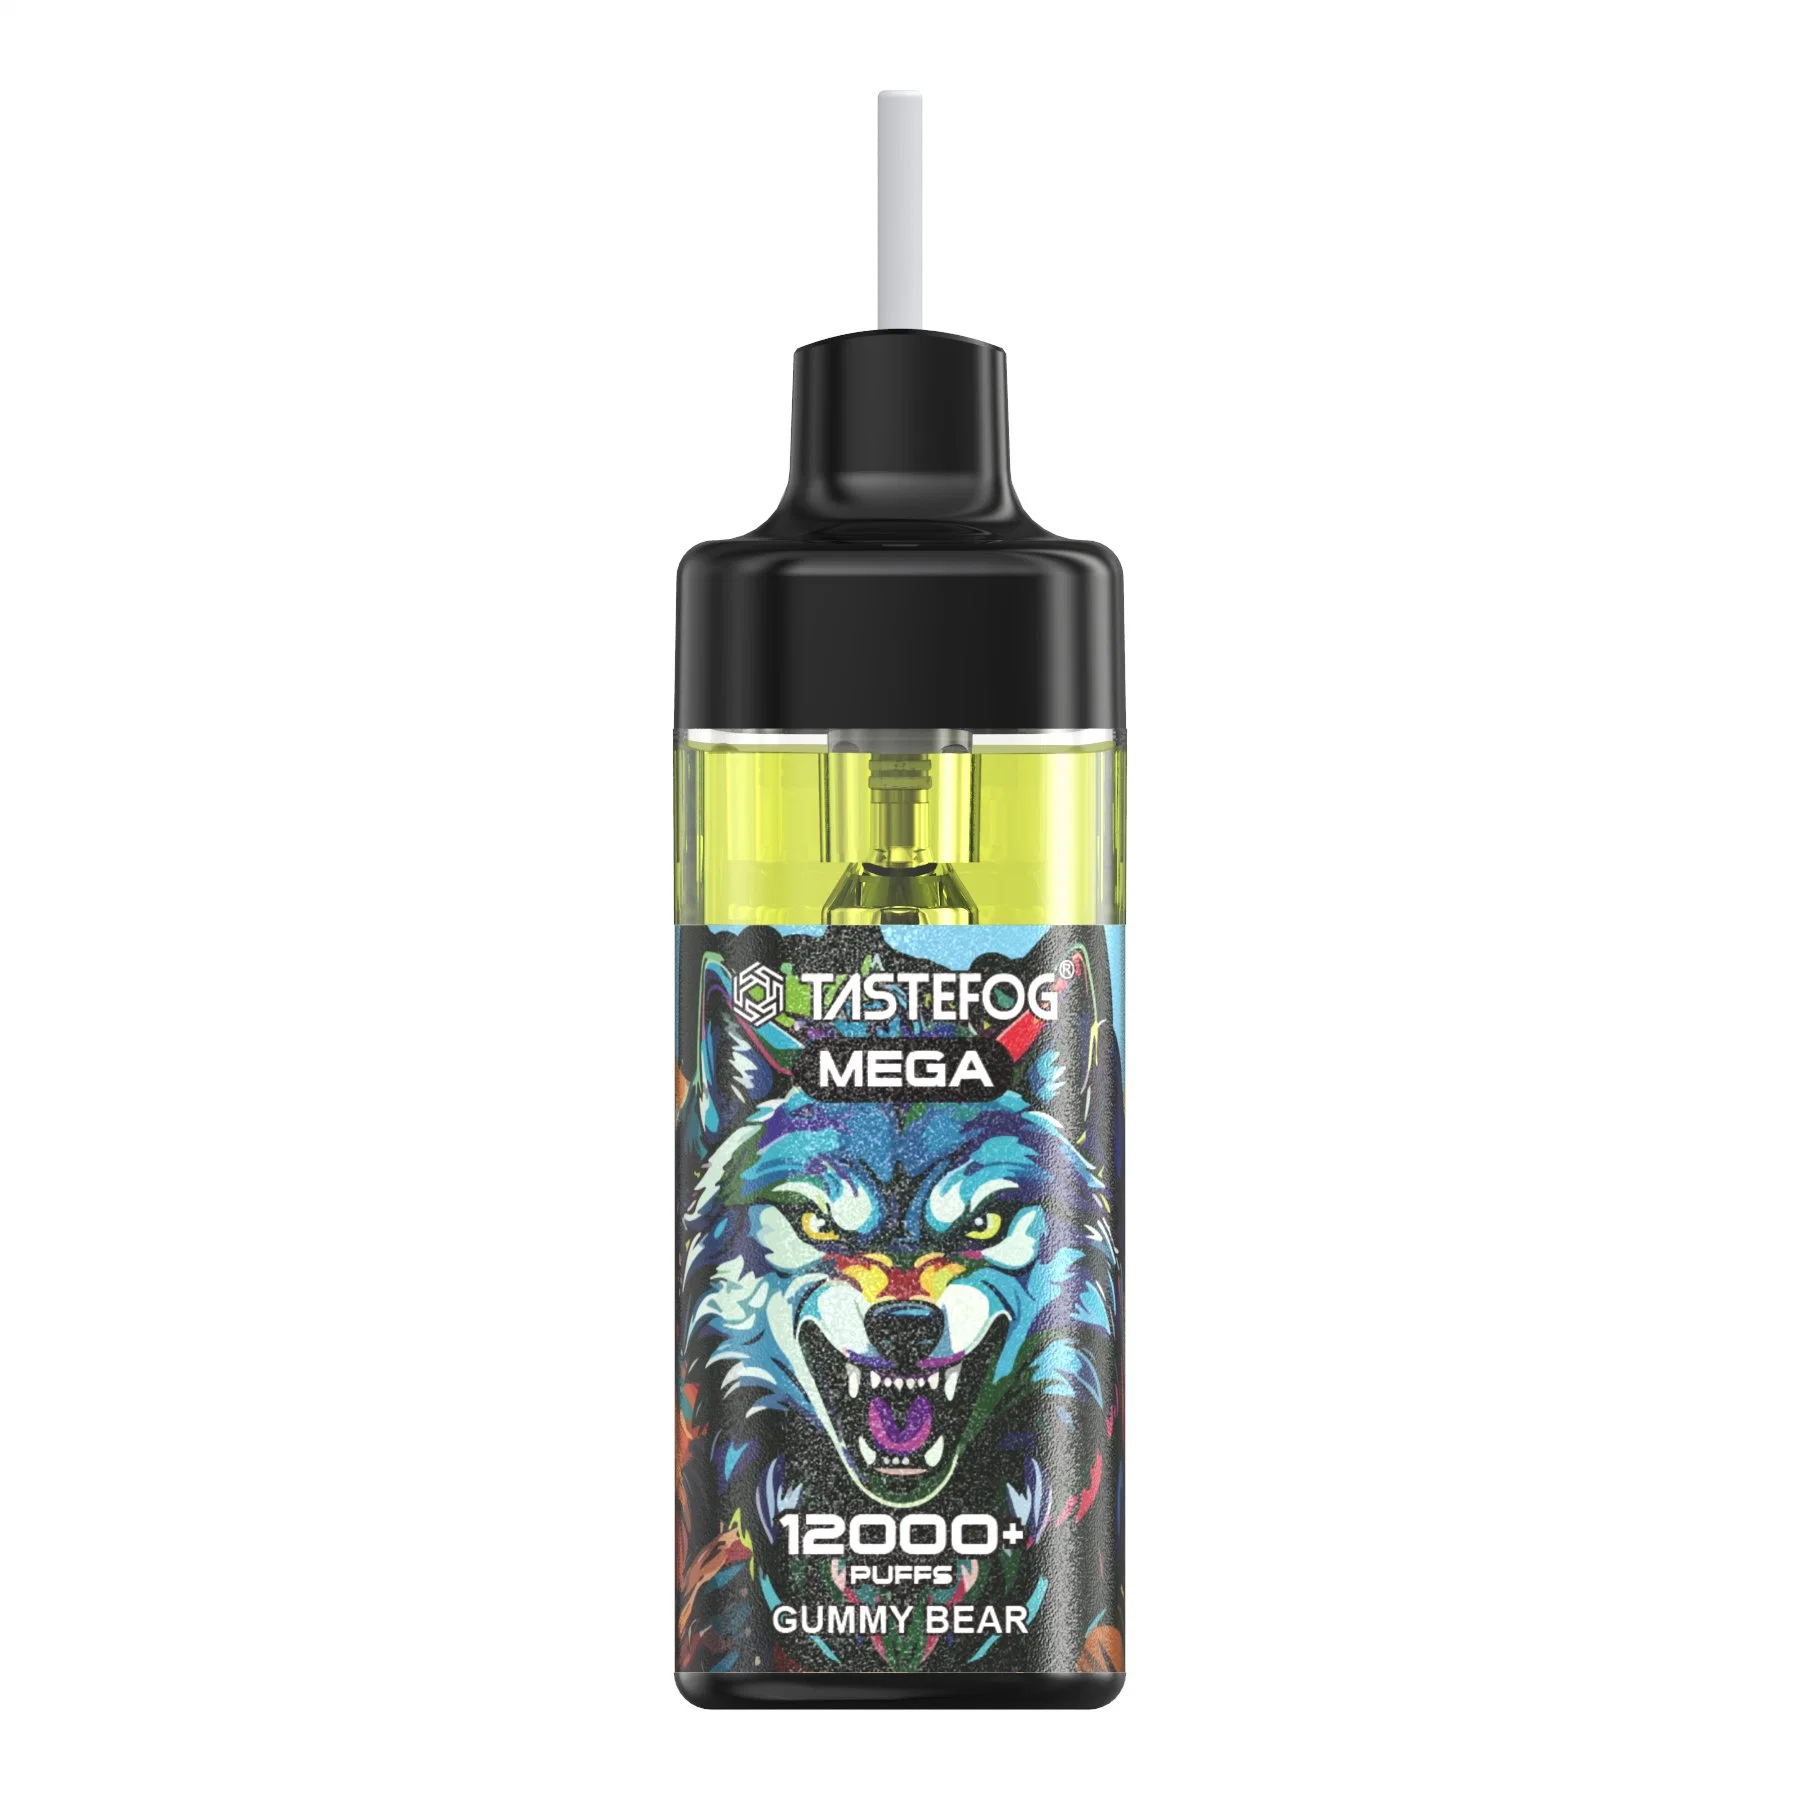 Newest E Cigarette Pod Tastefog Mega 12000+ Puffs Wholesale/Supplier Vape Pens with RGB Lights